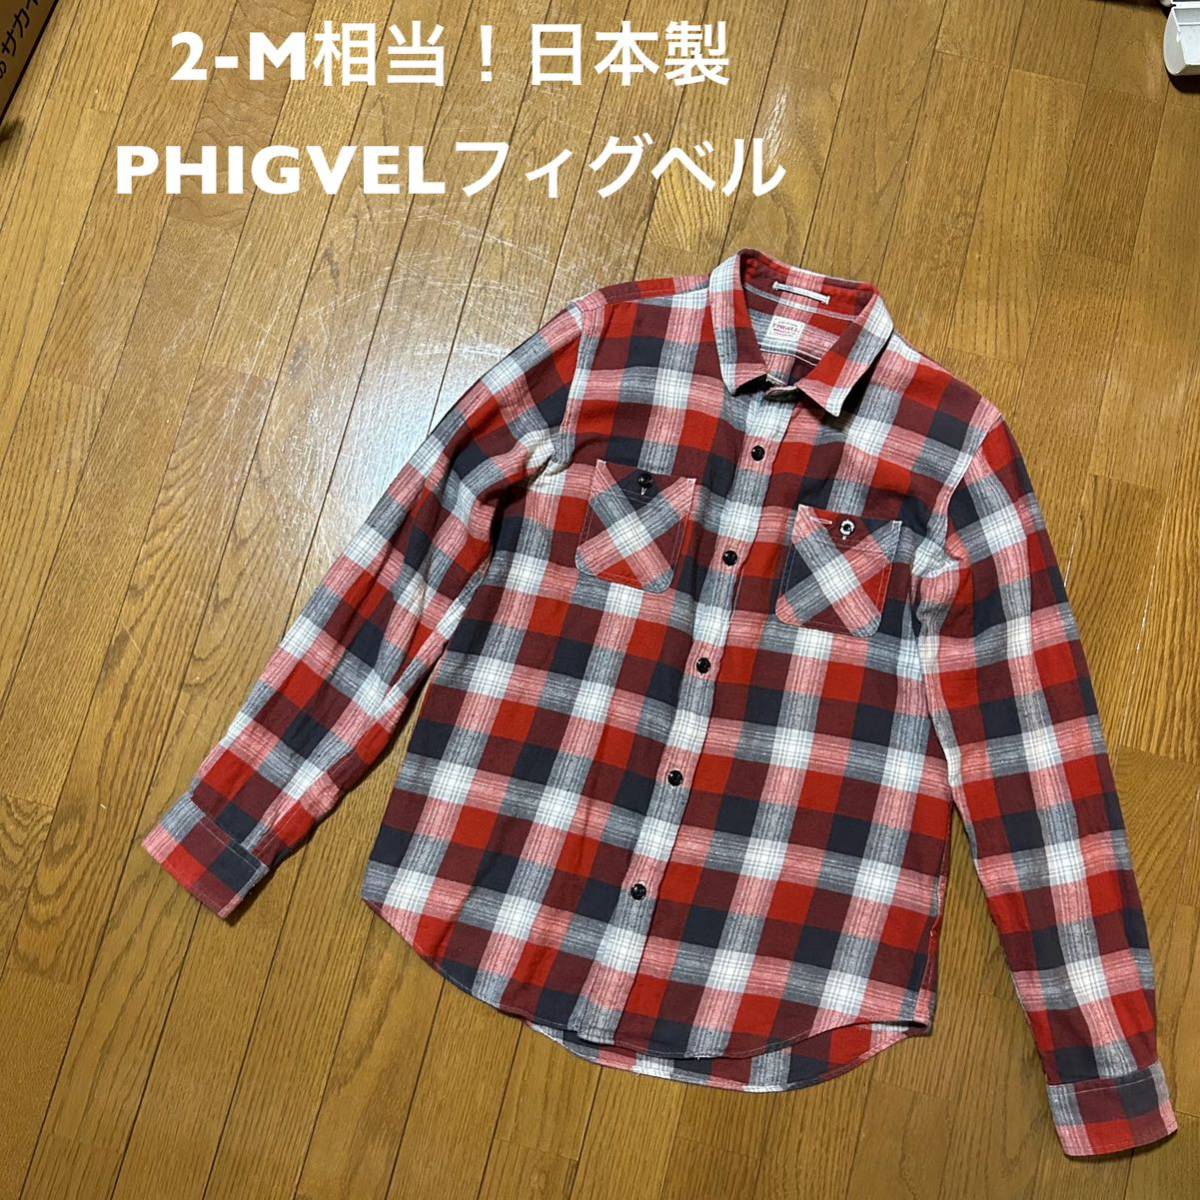 2 M相当 日本製 PHIGVELフィグベル 古着長袖ネルチェックシャツ 薄手